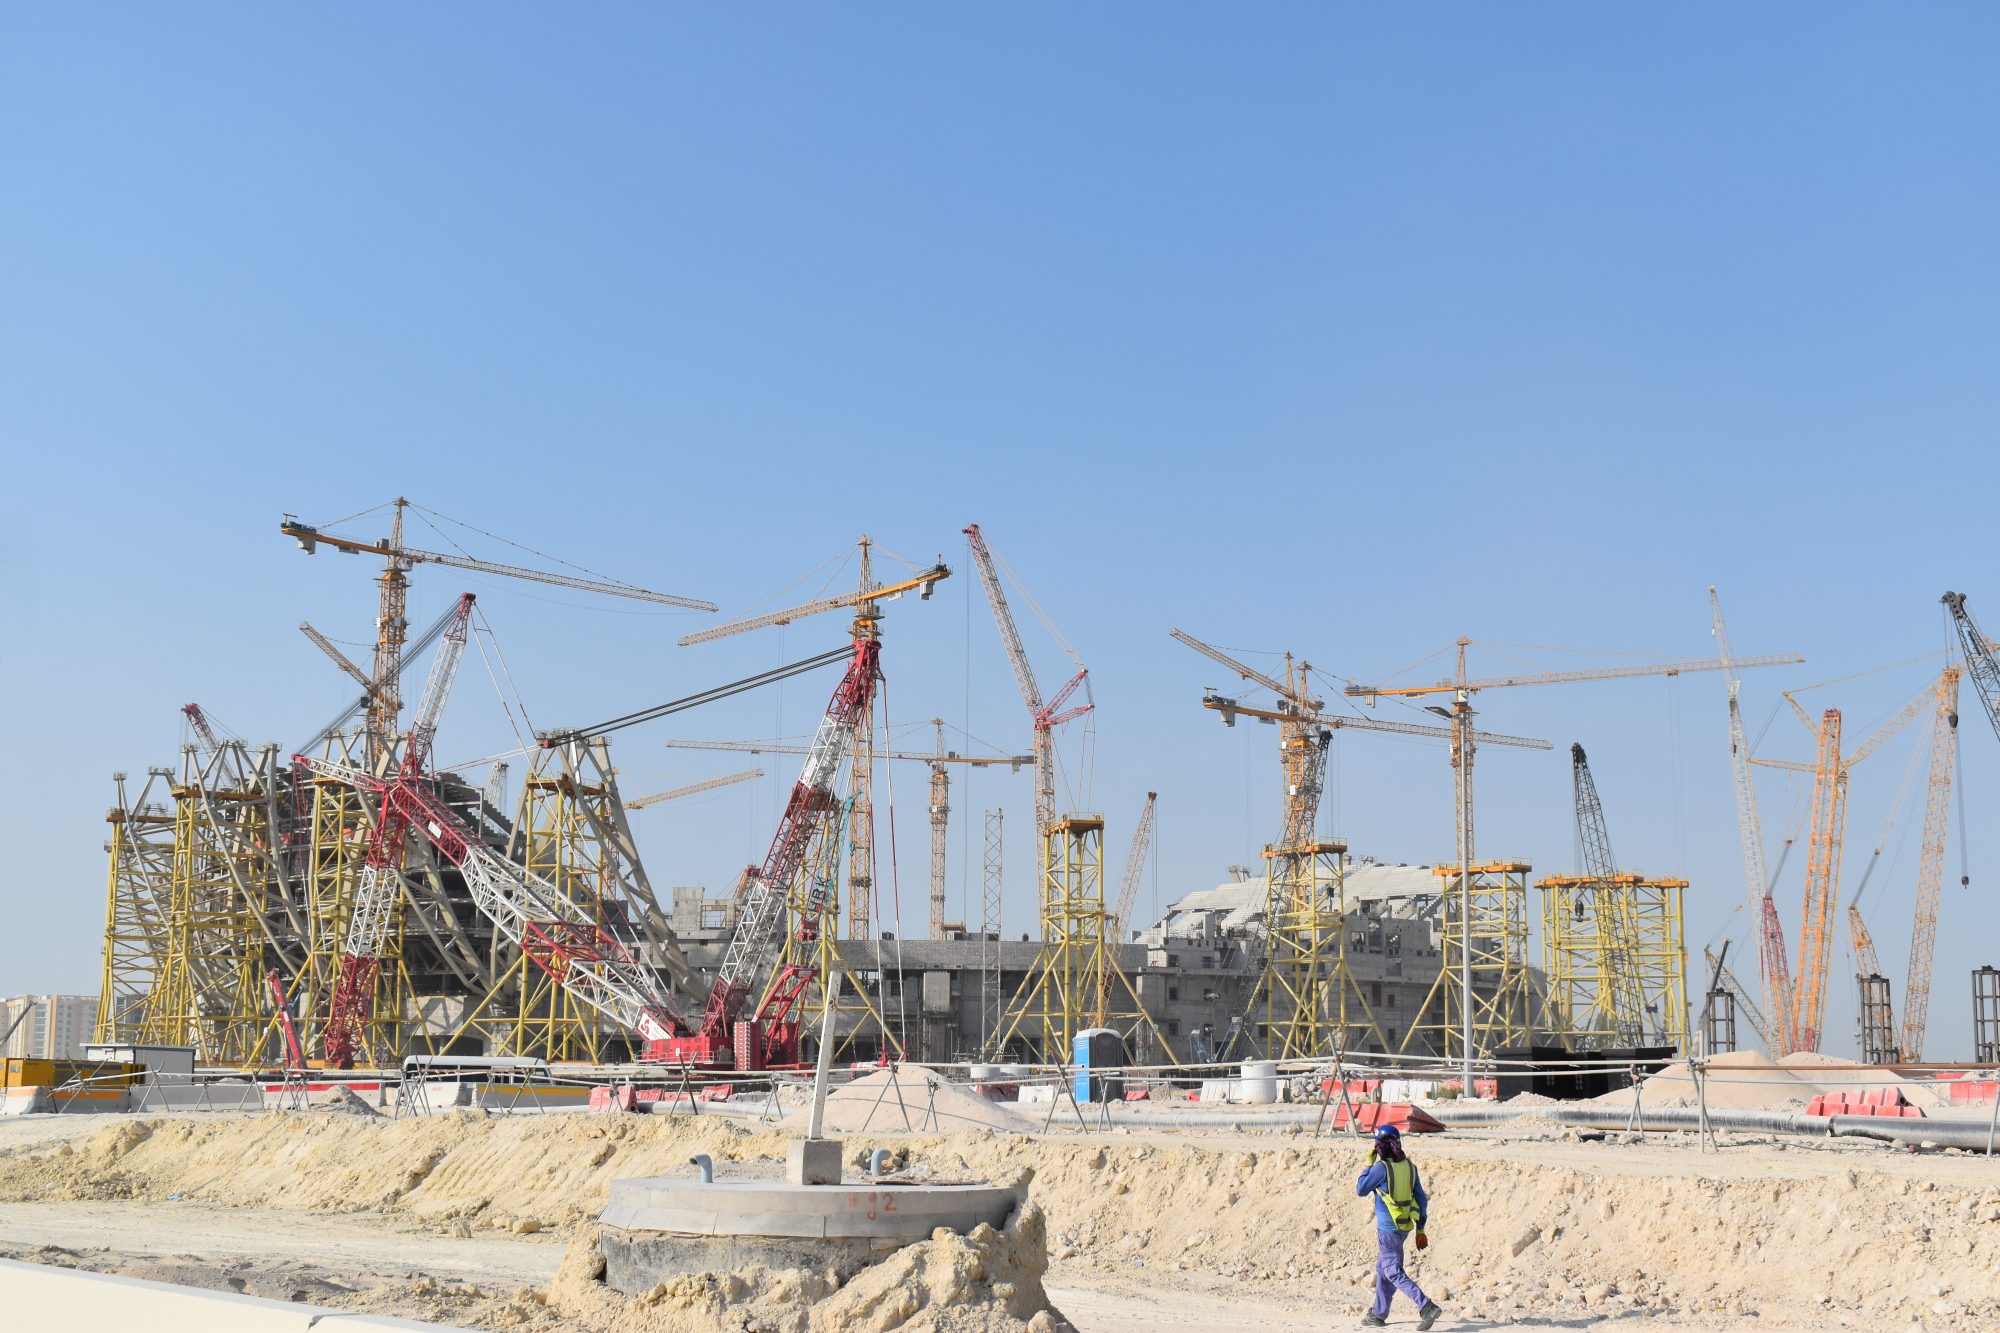 Future stadium at Doha, Qatar under construction for Qatar 2022 Football World Cup